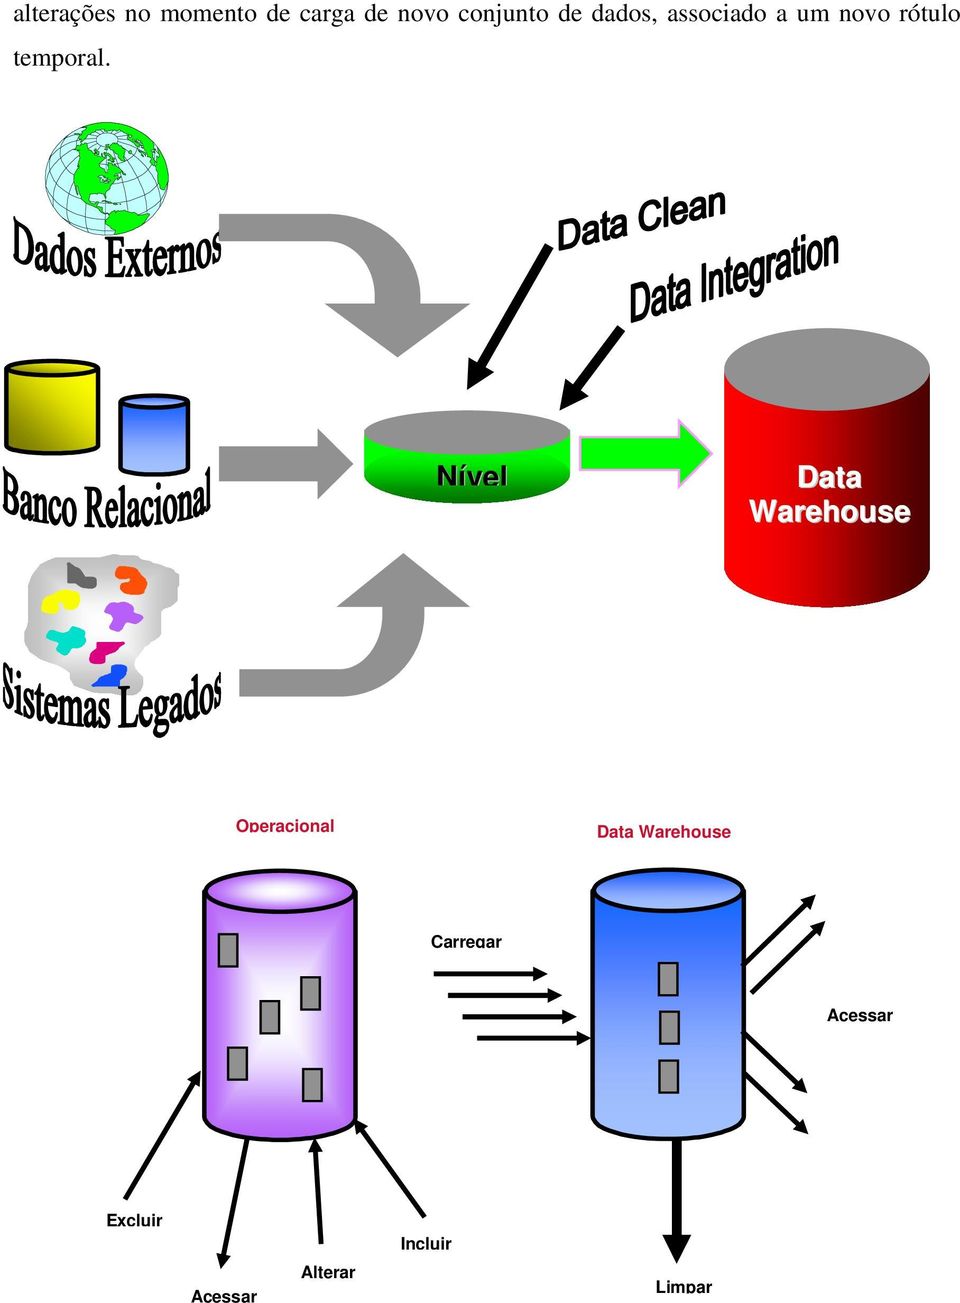 Nível Data Warehouse Operacional Data Warehouse